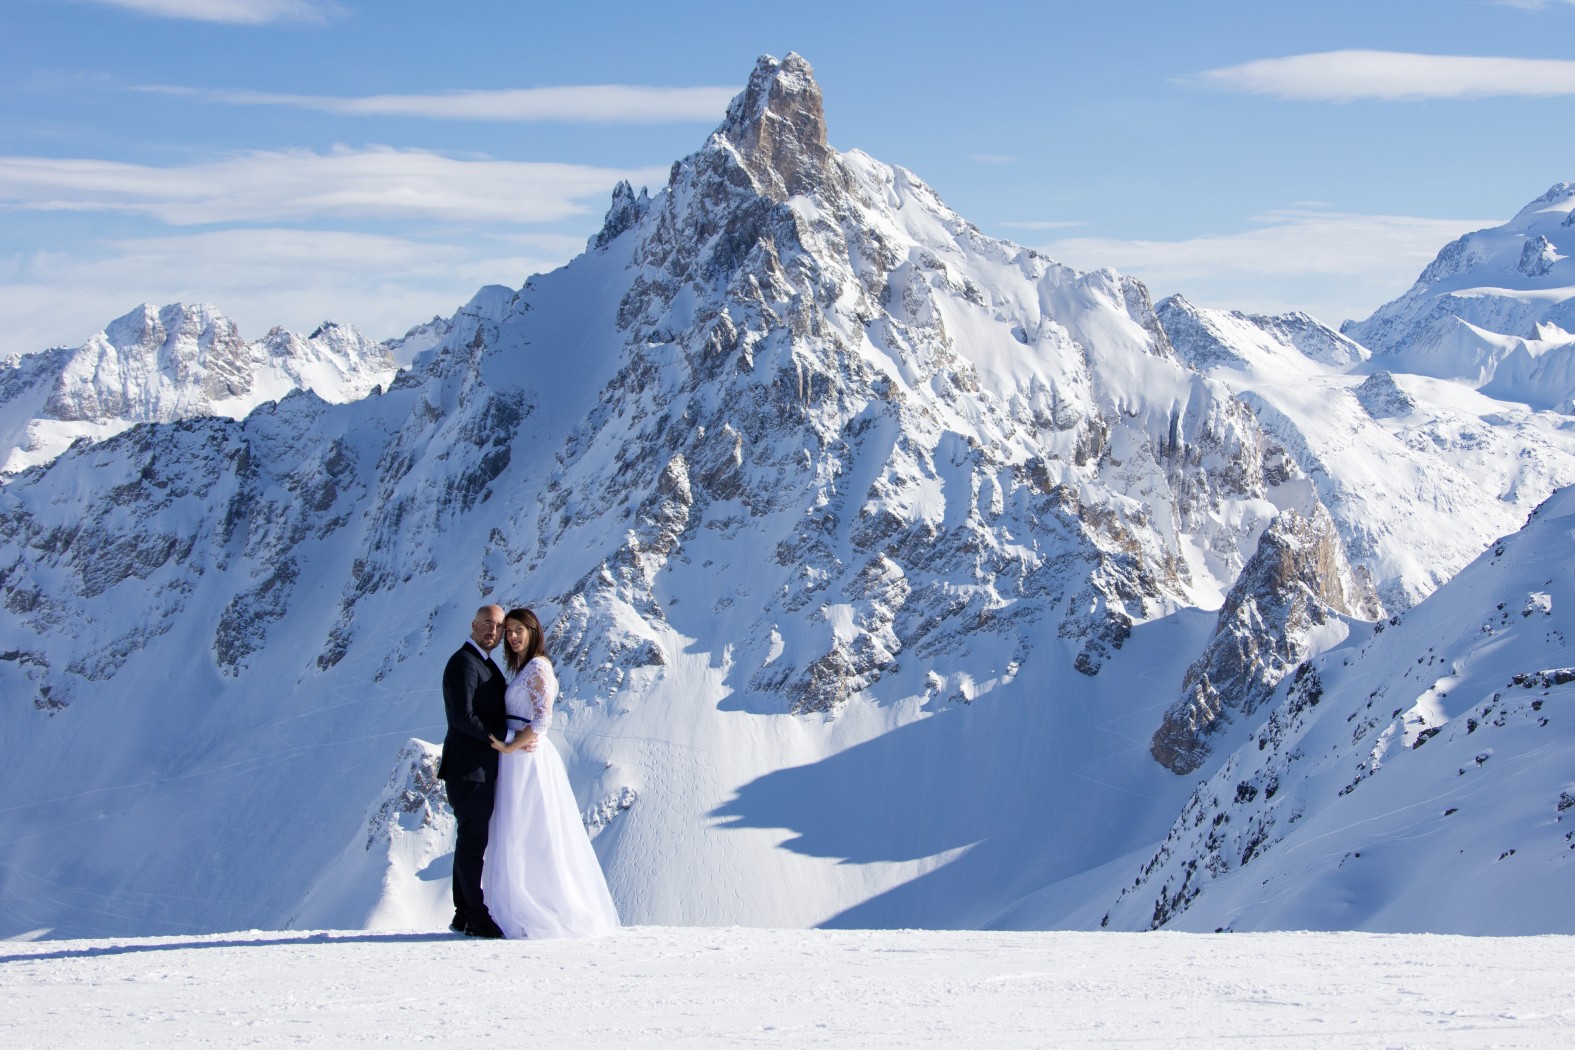 Photographe mariage Grenoble Chambéry courchevel Winter wedding courchevel